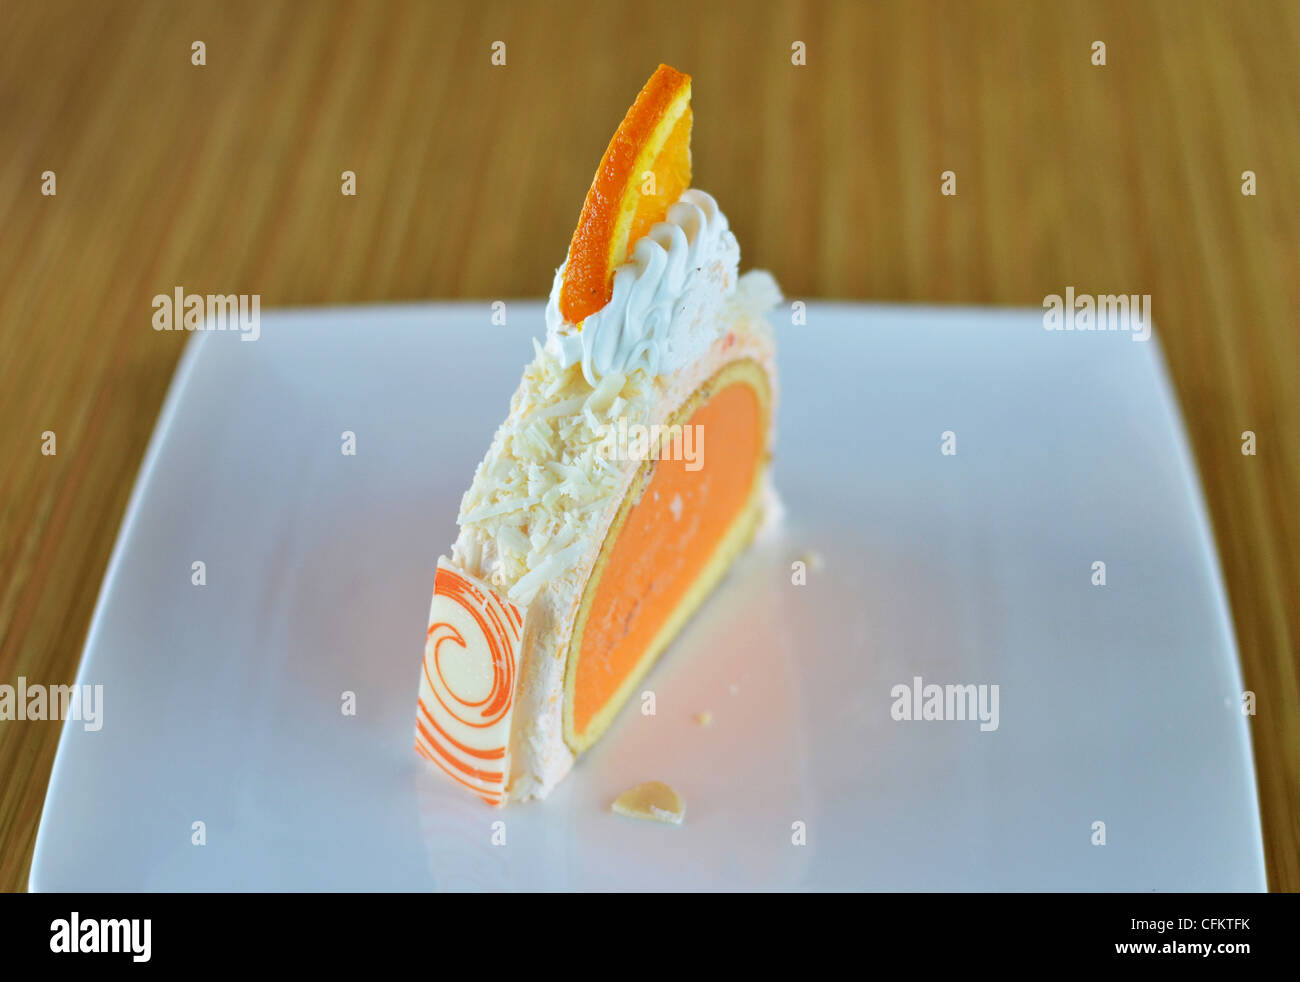 orange ice cream cake with whipped cream Stock Photo